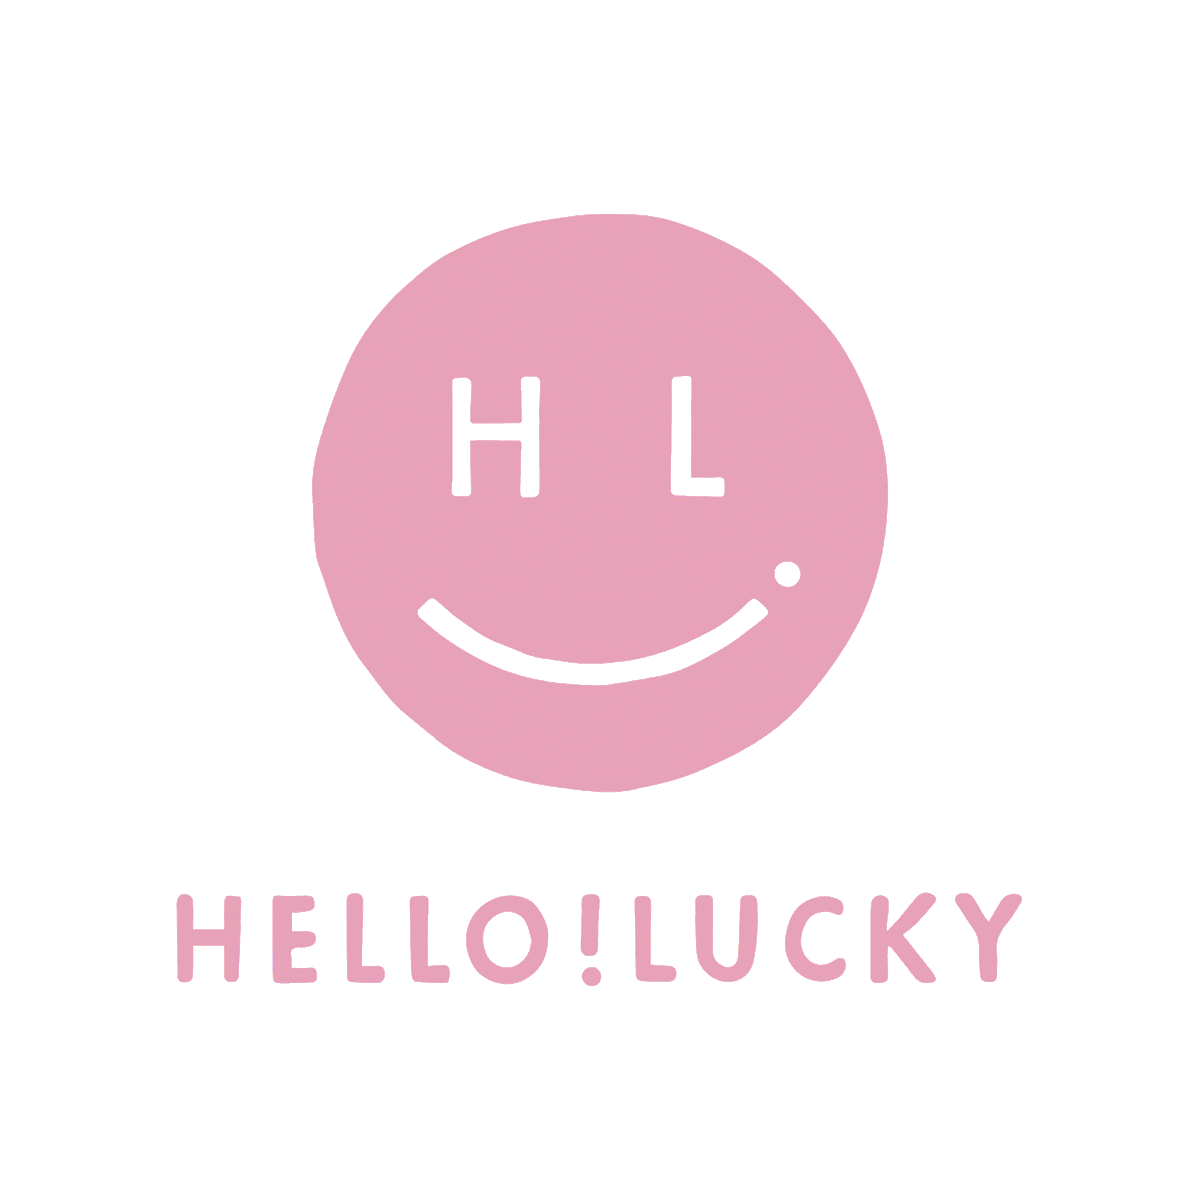 (c) Hellolucky.com